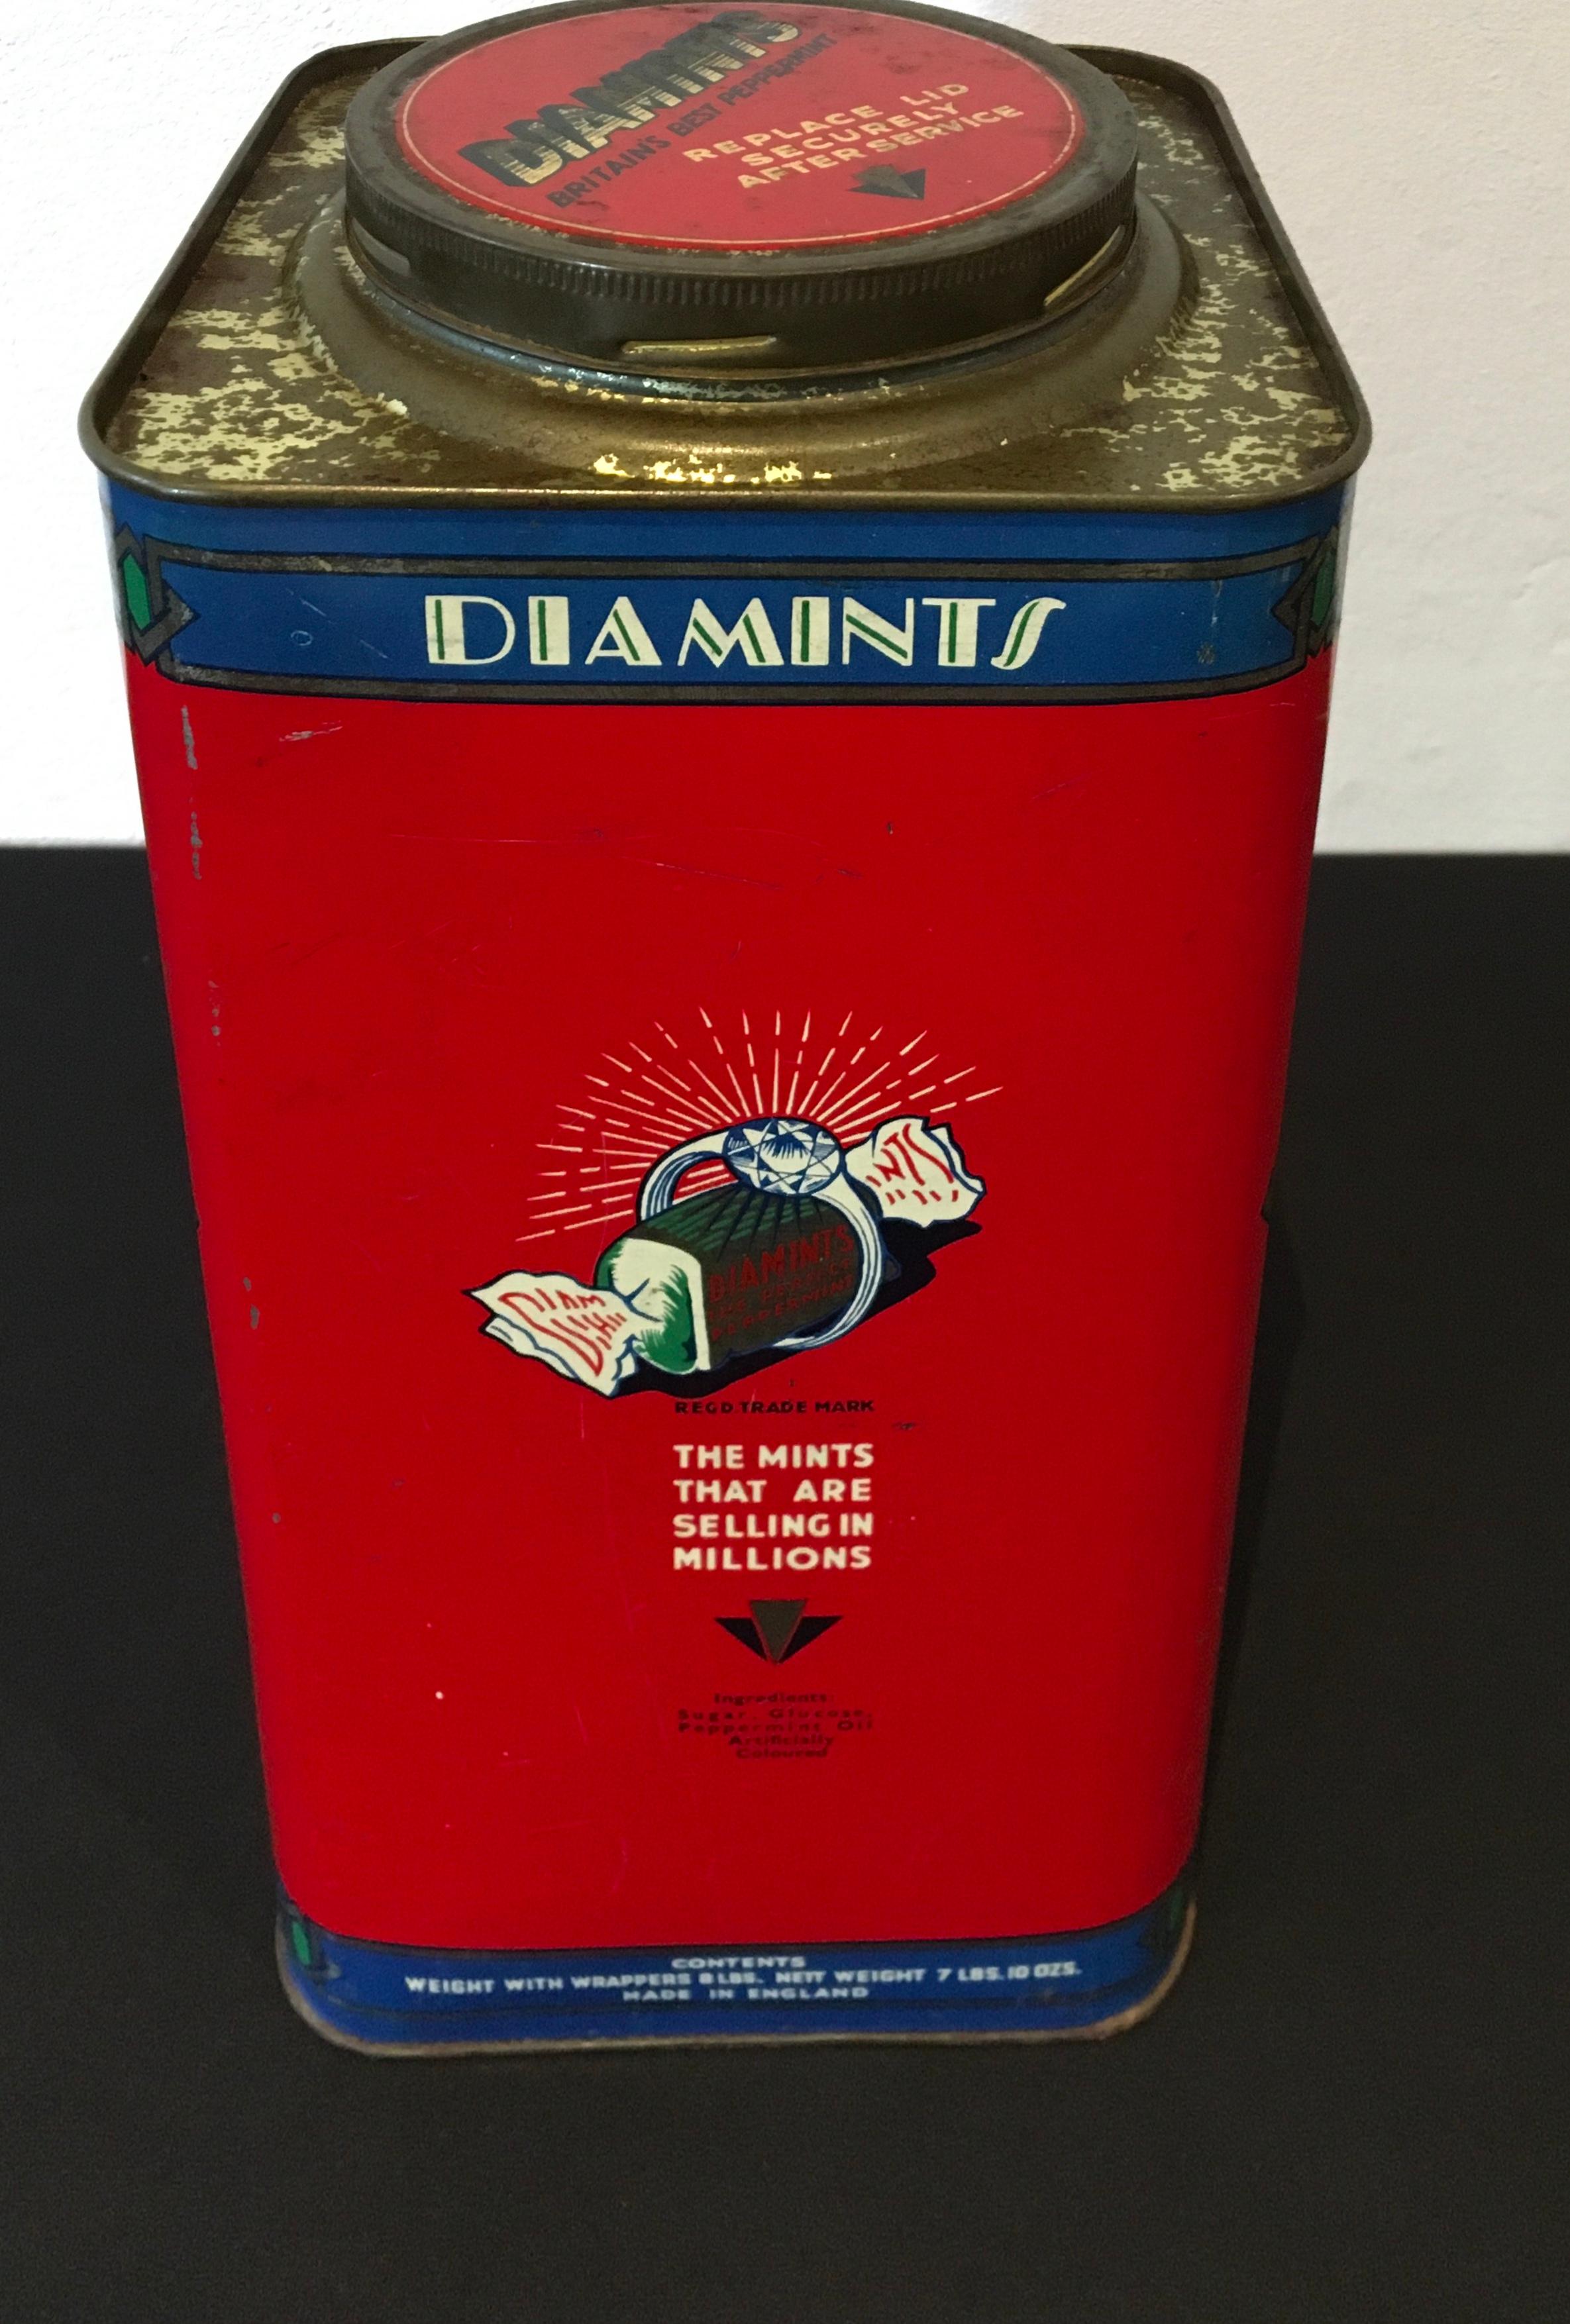 Diamints Peppermint, Art Deco Tin For Sale 5